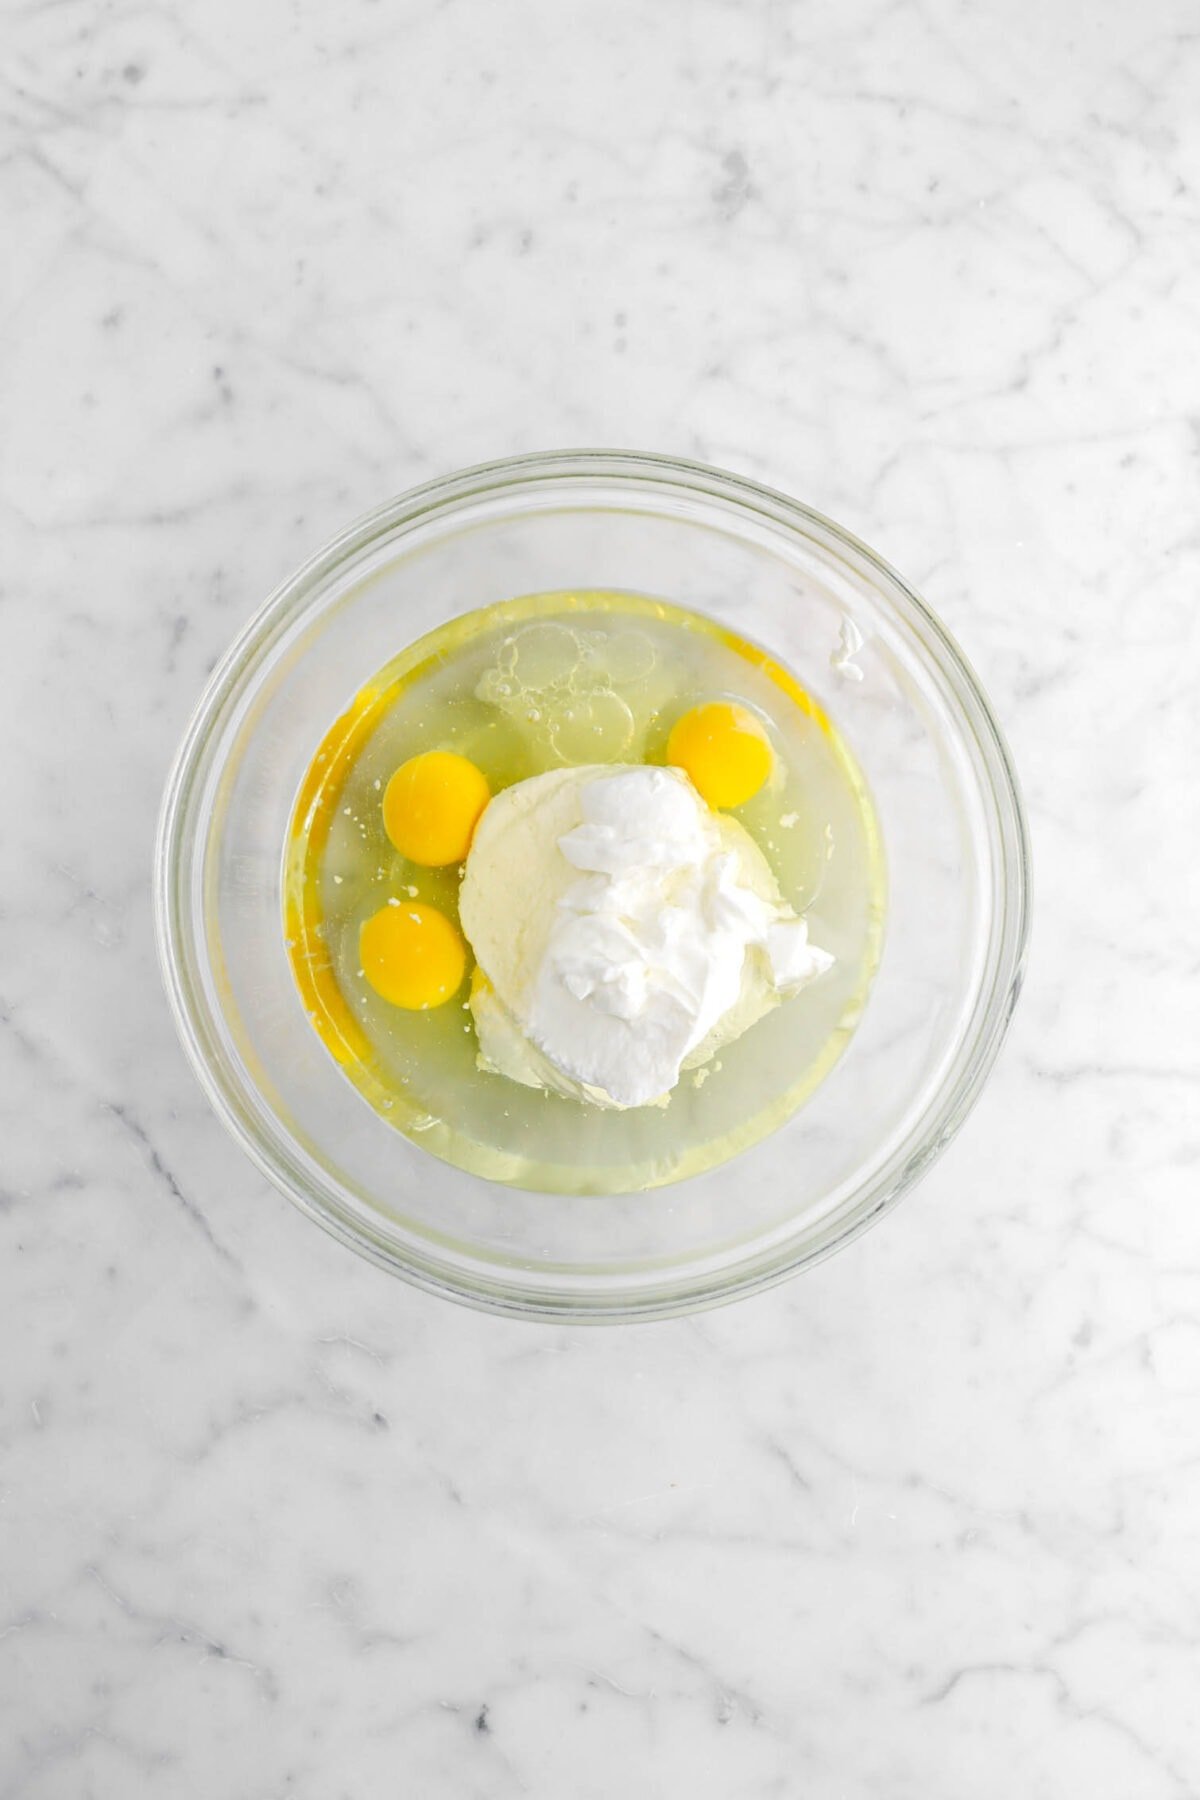 vegetable oil, eggs, lemon juice, and yogurt in glass bowl.